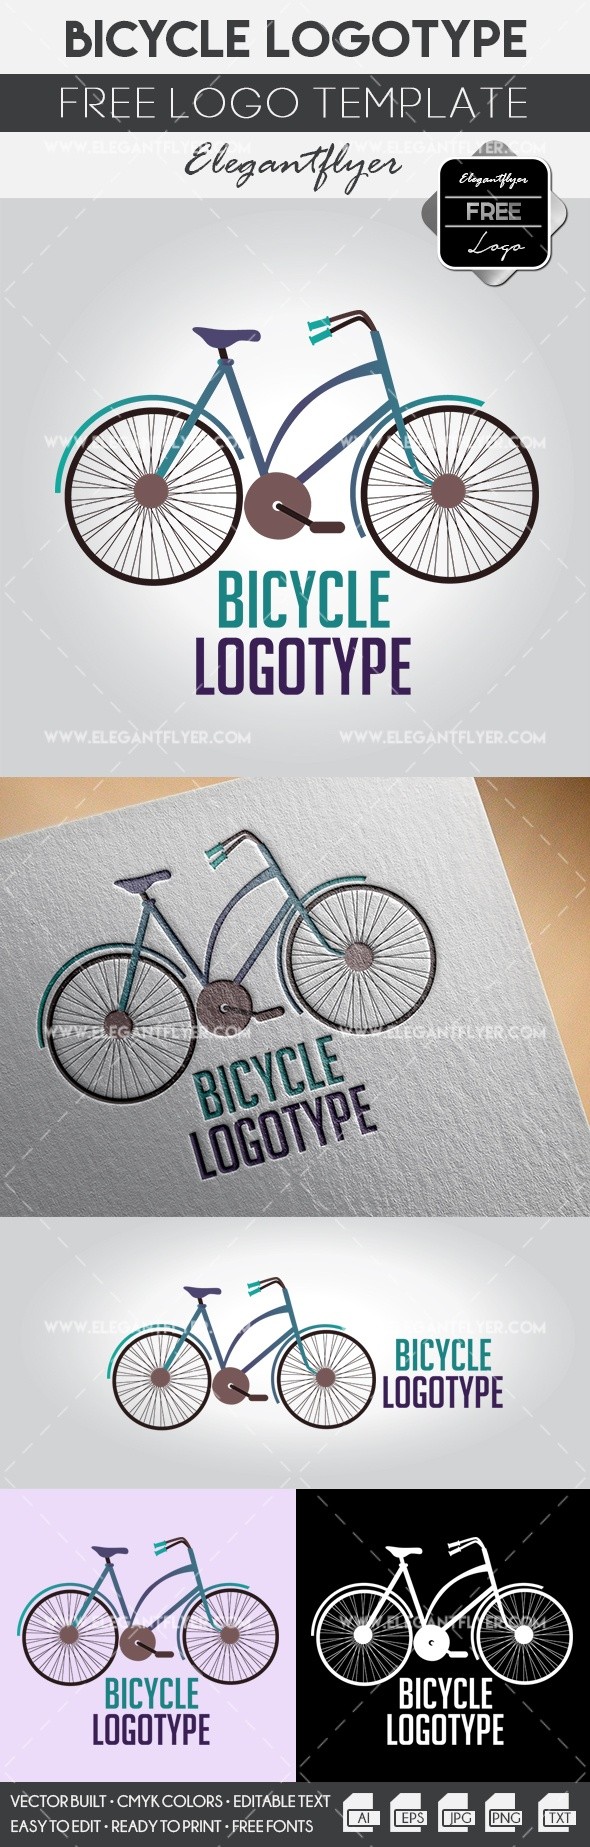 Bicyclette by ElegantFlyer